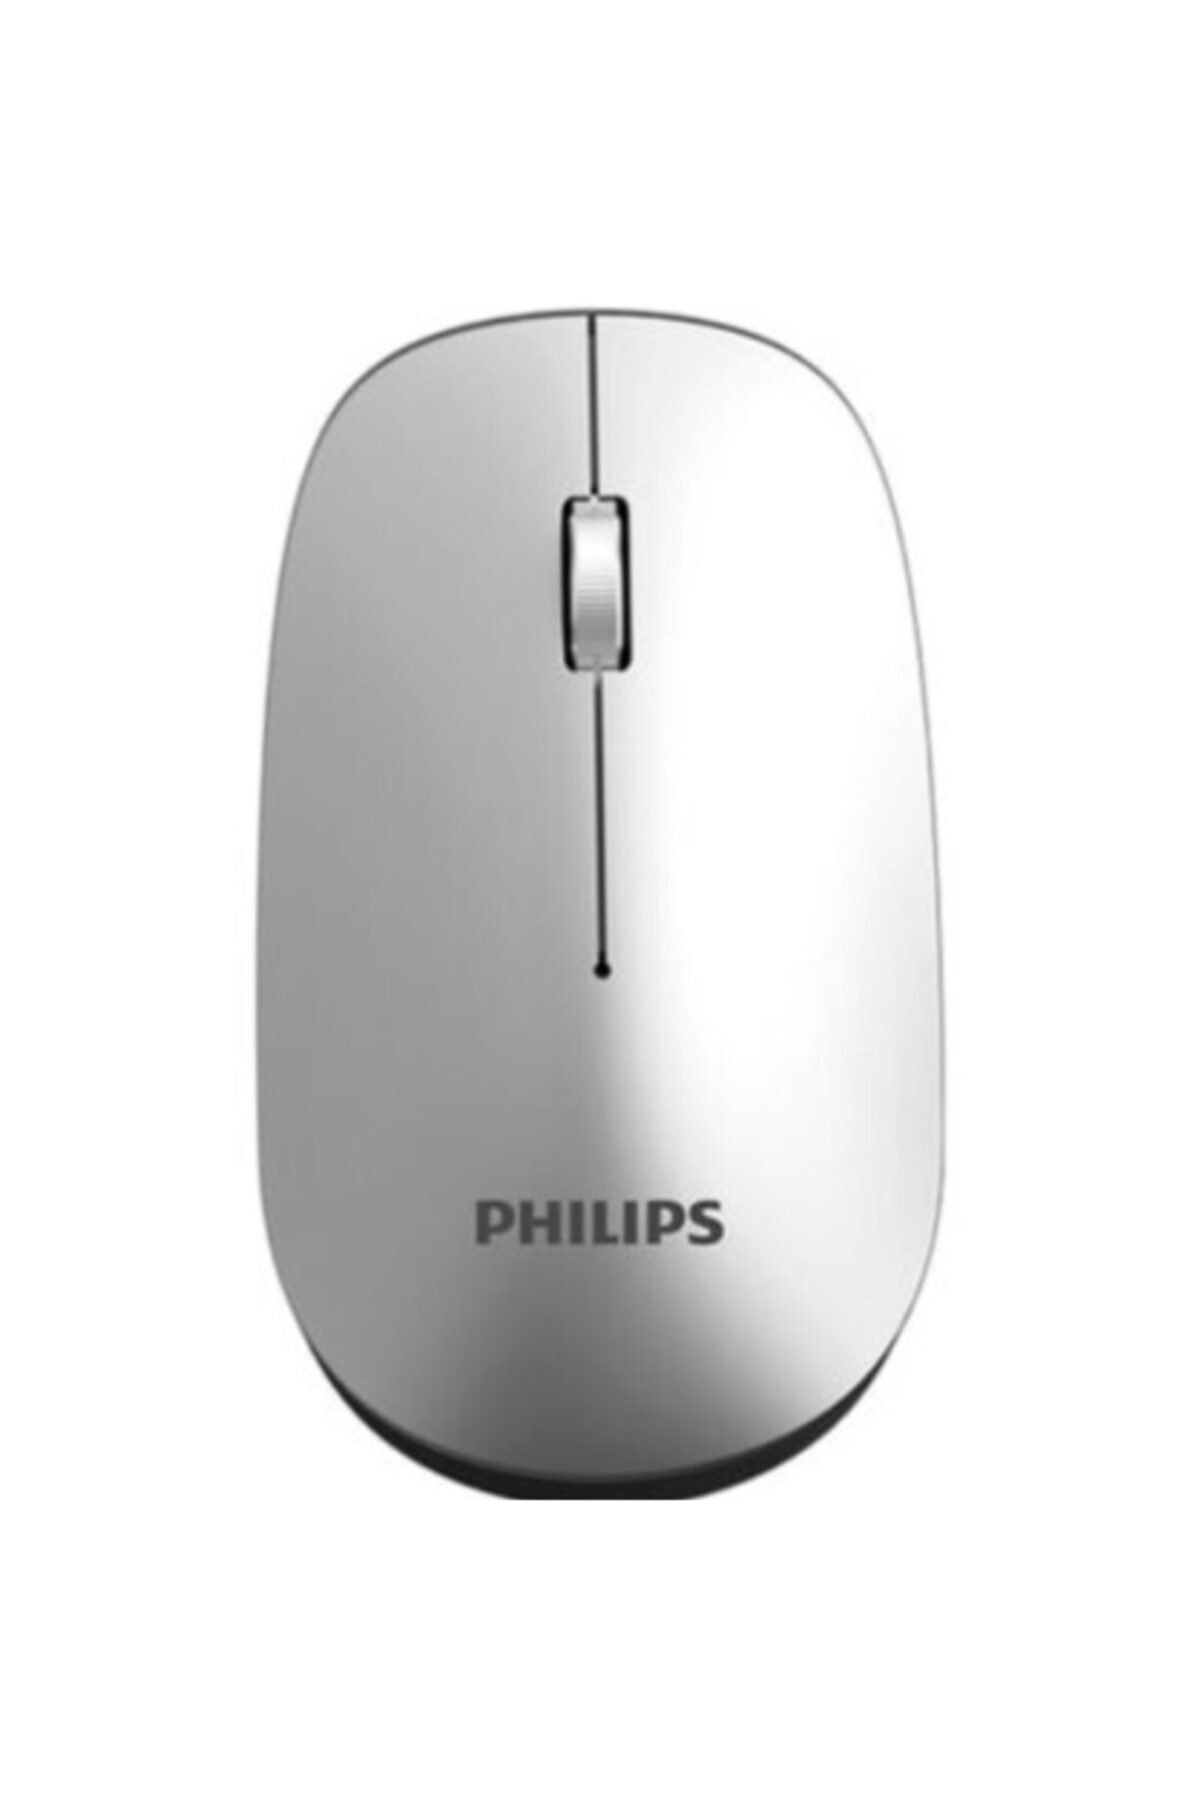 Филипс wifi. Мышь Philips Wireless Mouse spk7507b. Мышь беспроводная Philips spk7607. Philips беспроводная мышь spk7407. Мышь Philips spk9212.